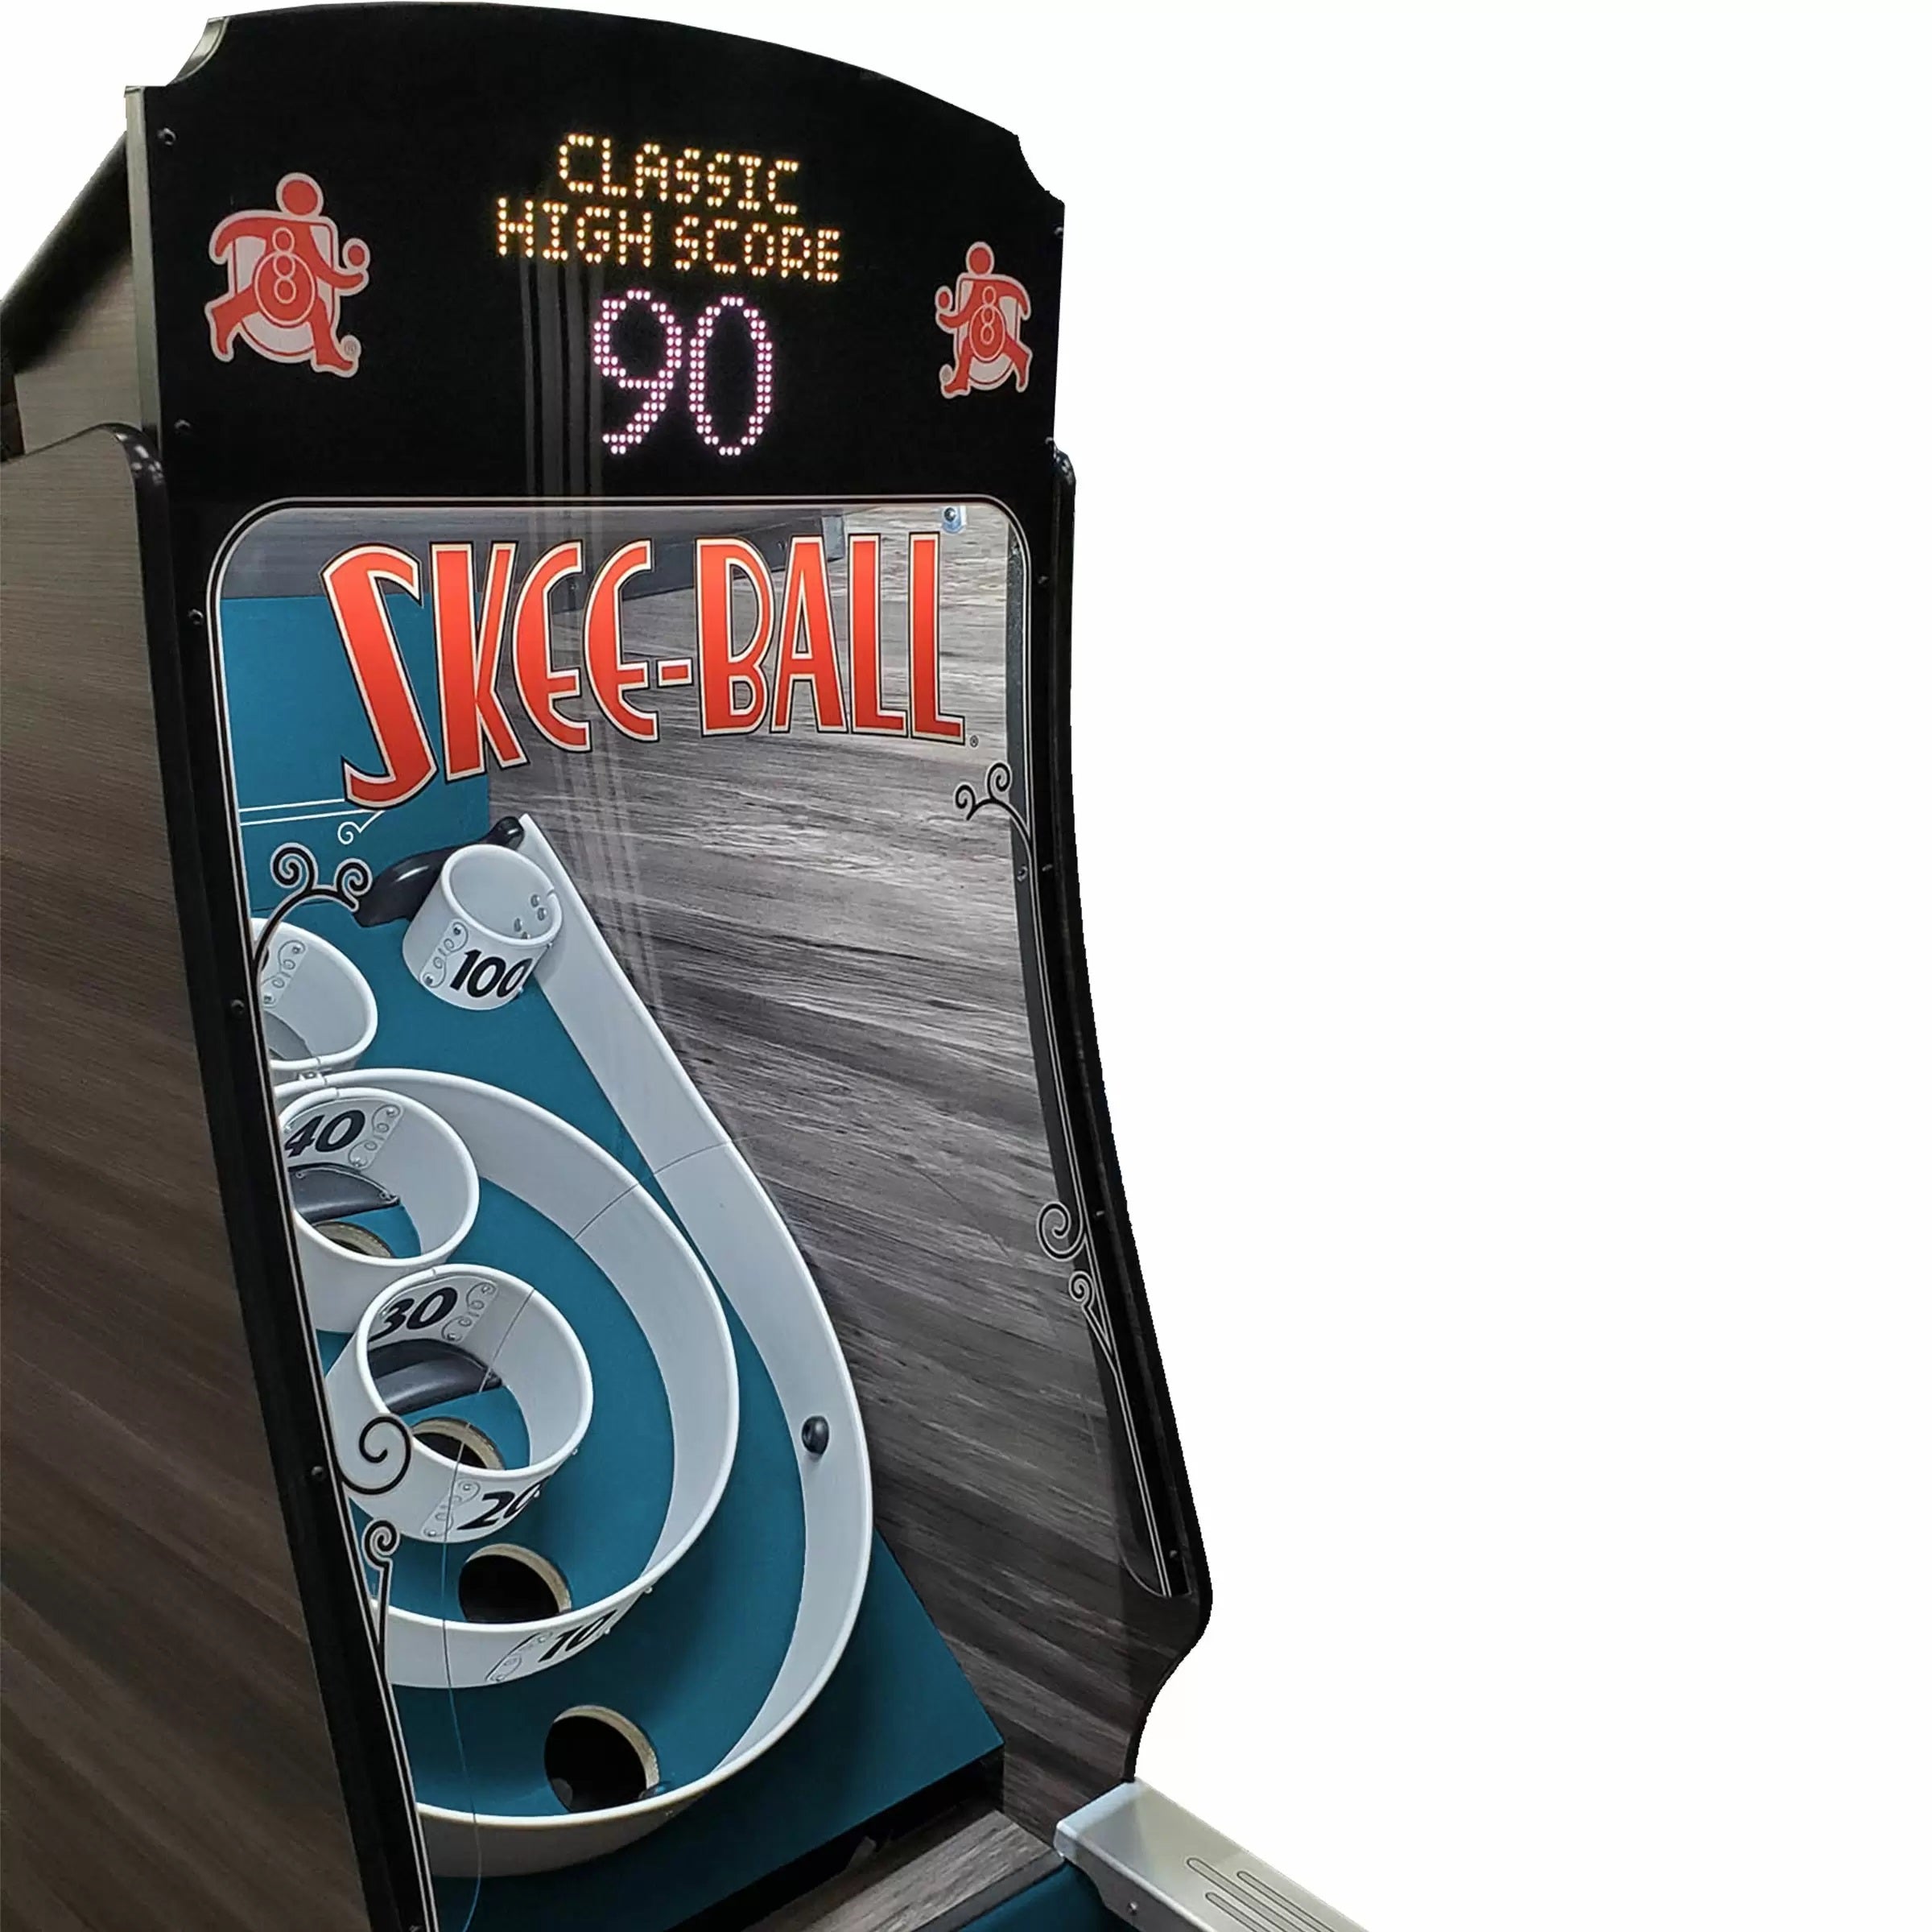 Imperial USA Home Arcade Premium Skee ball with Indigo Cork Front Board